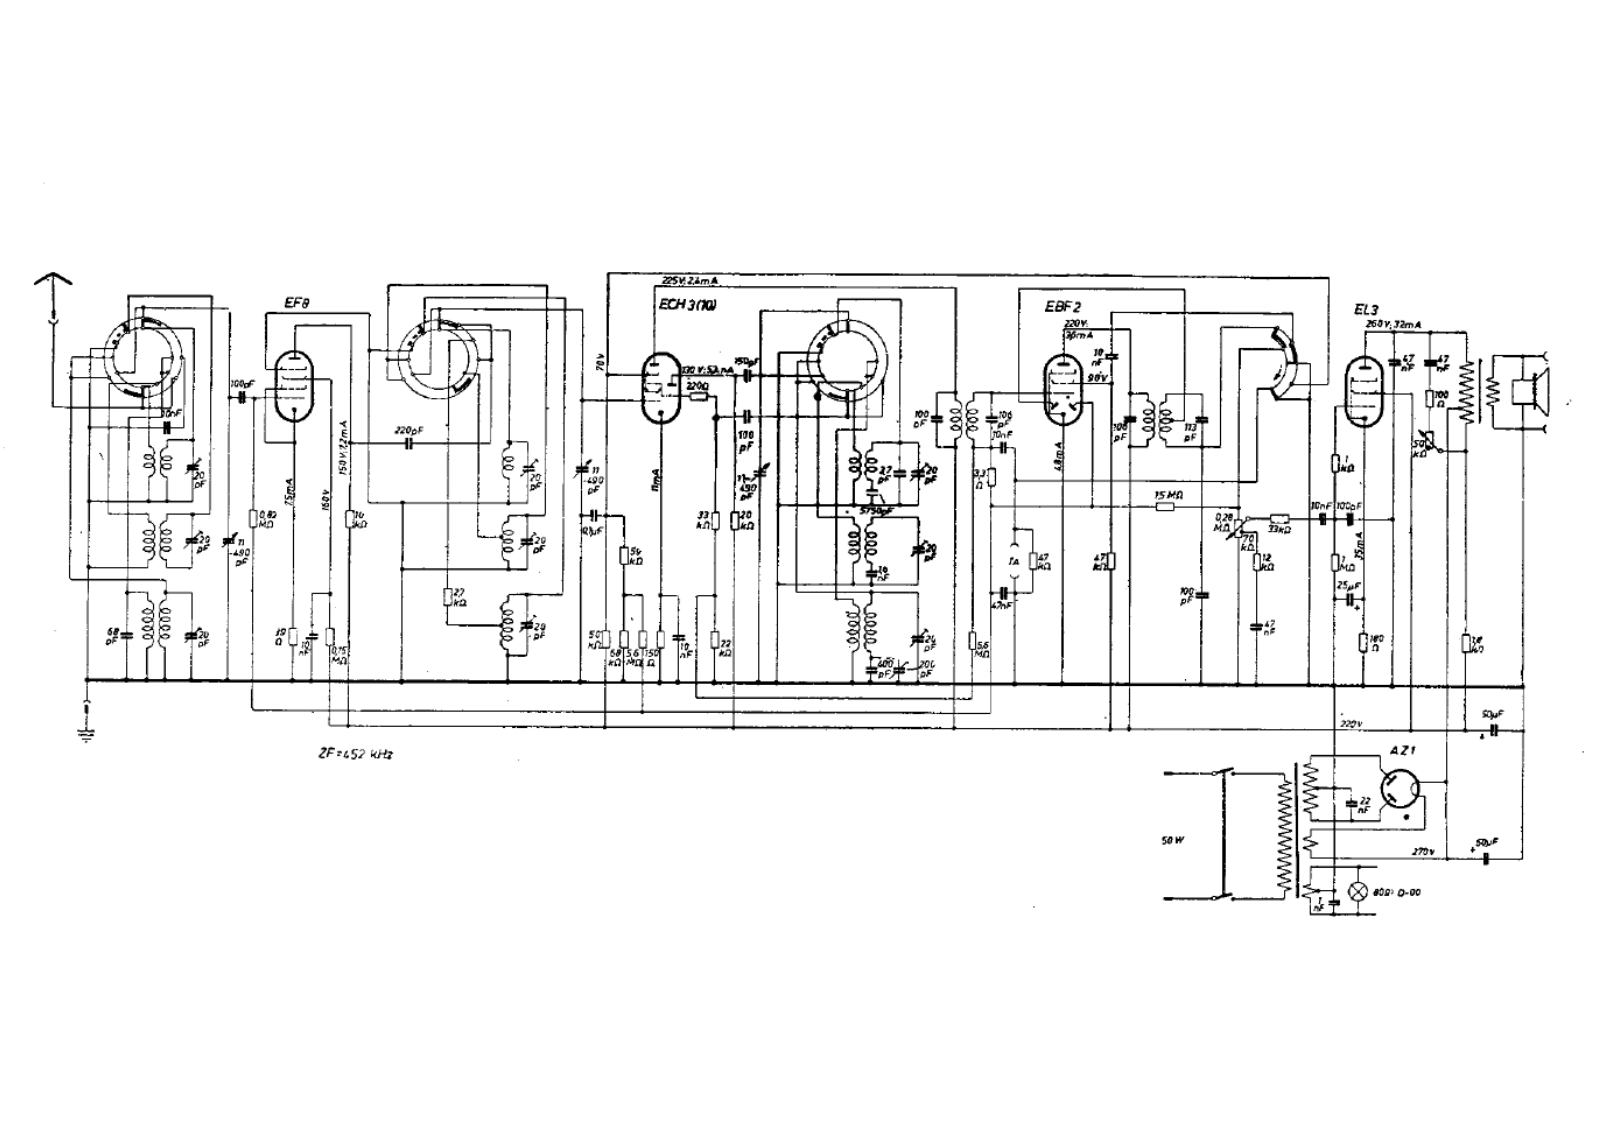 Philips 313a schematic